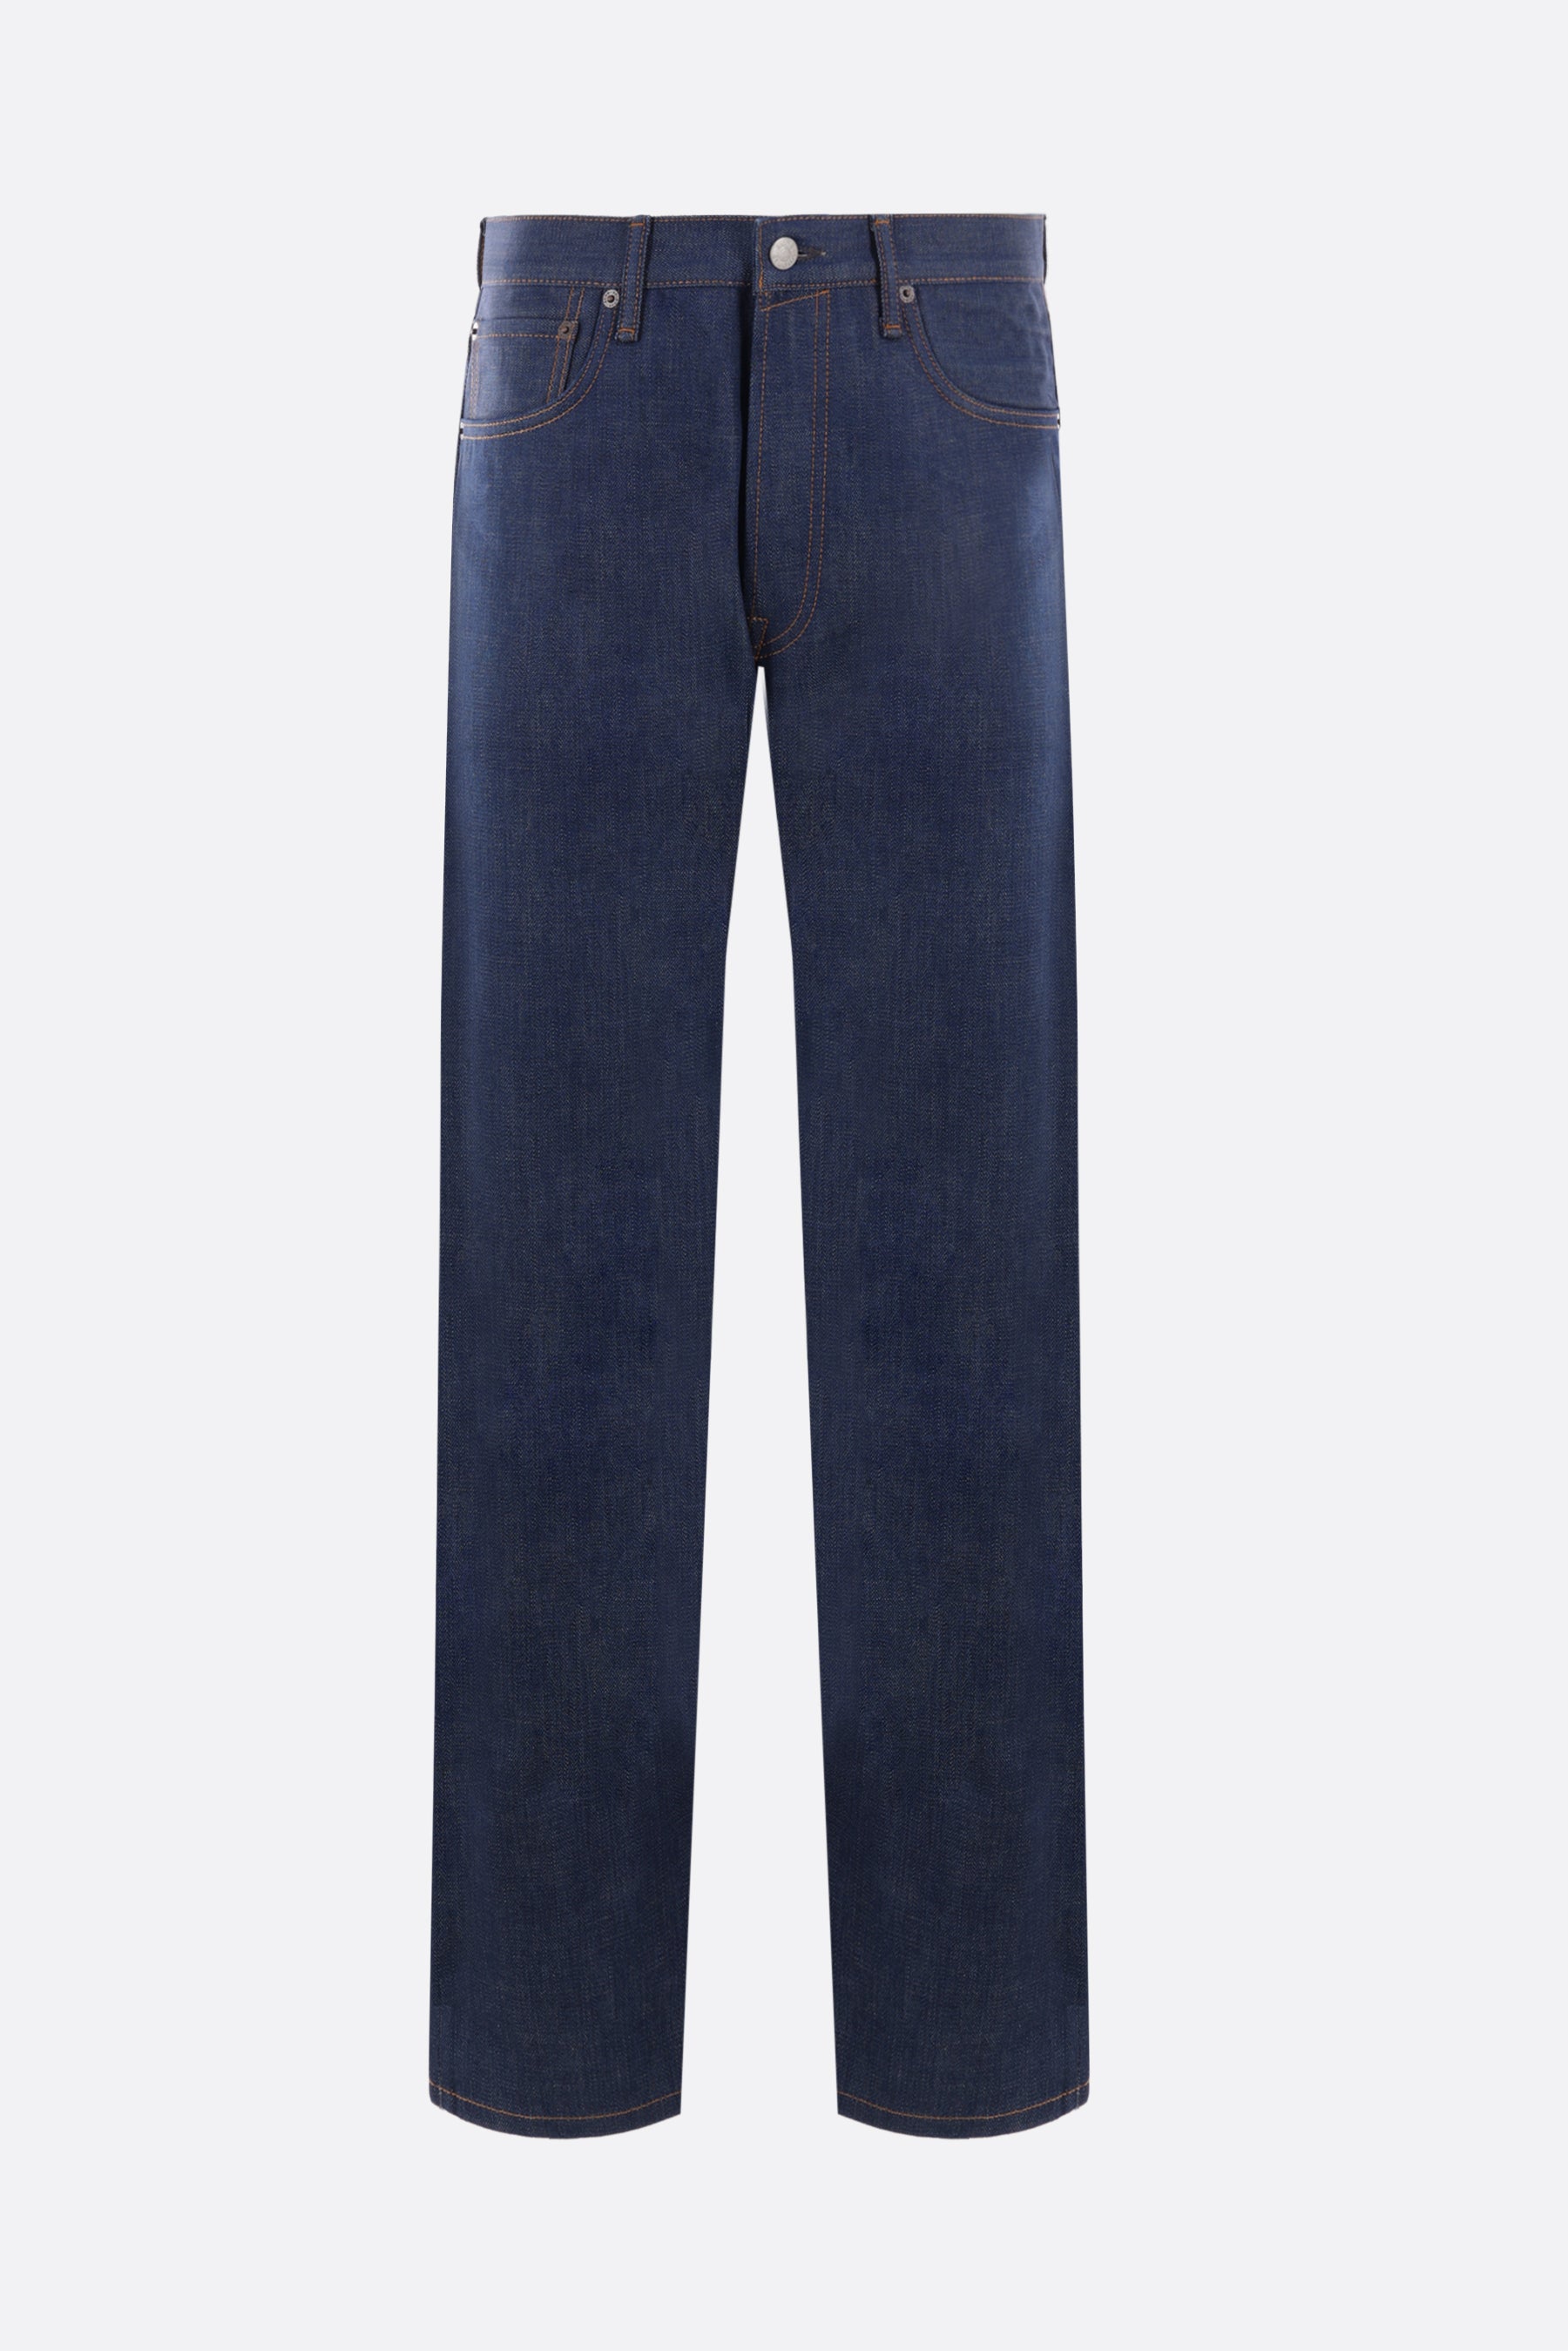 jeans regular-fit 1996 in denim